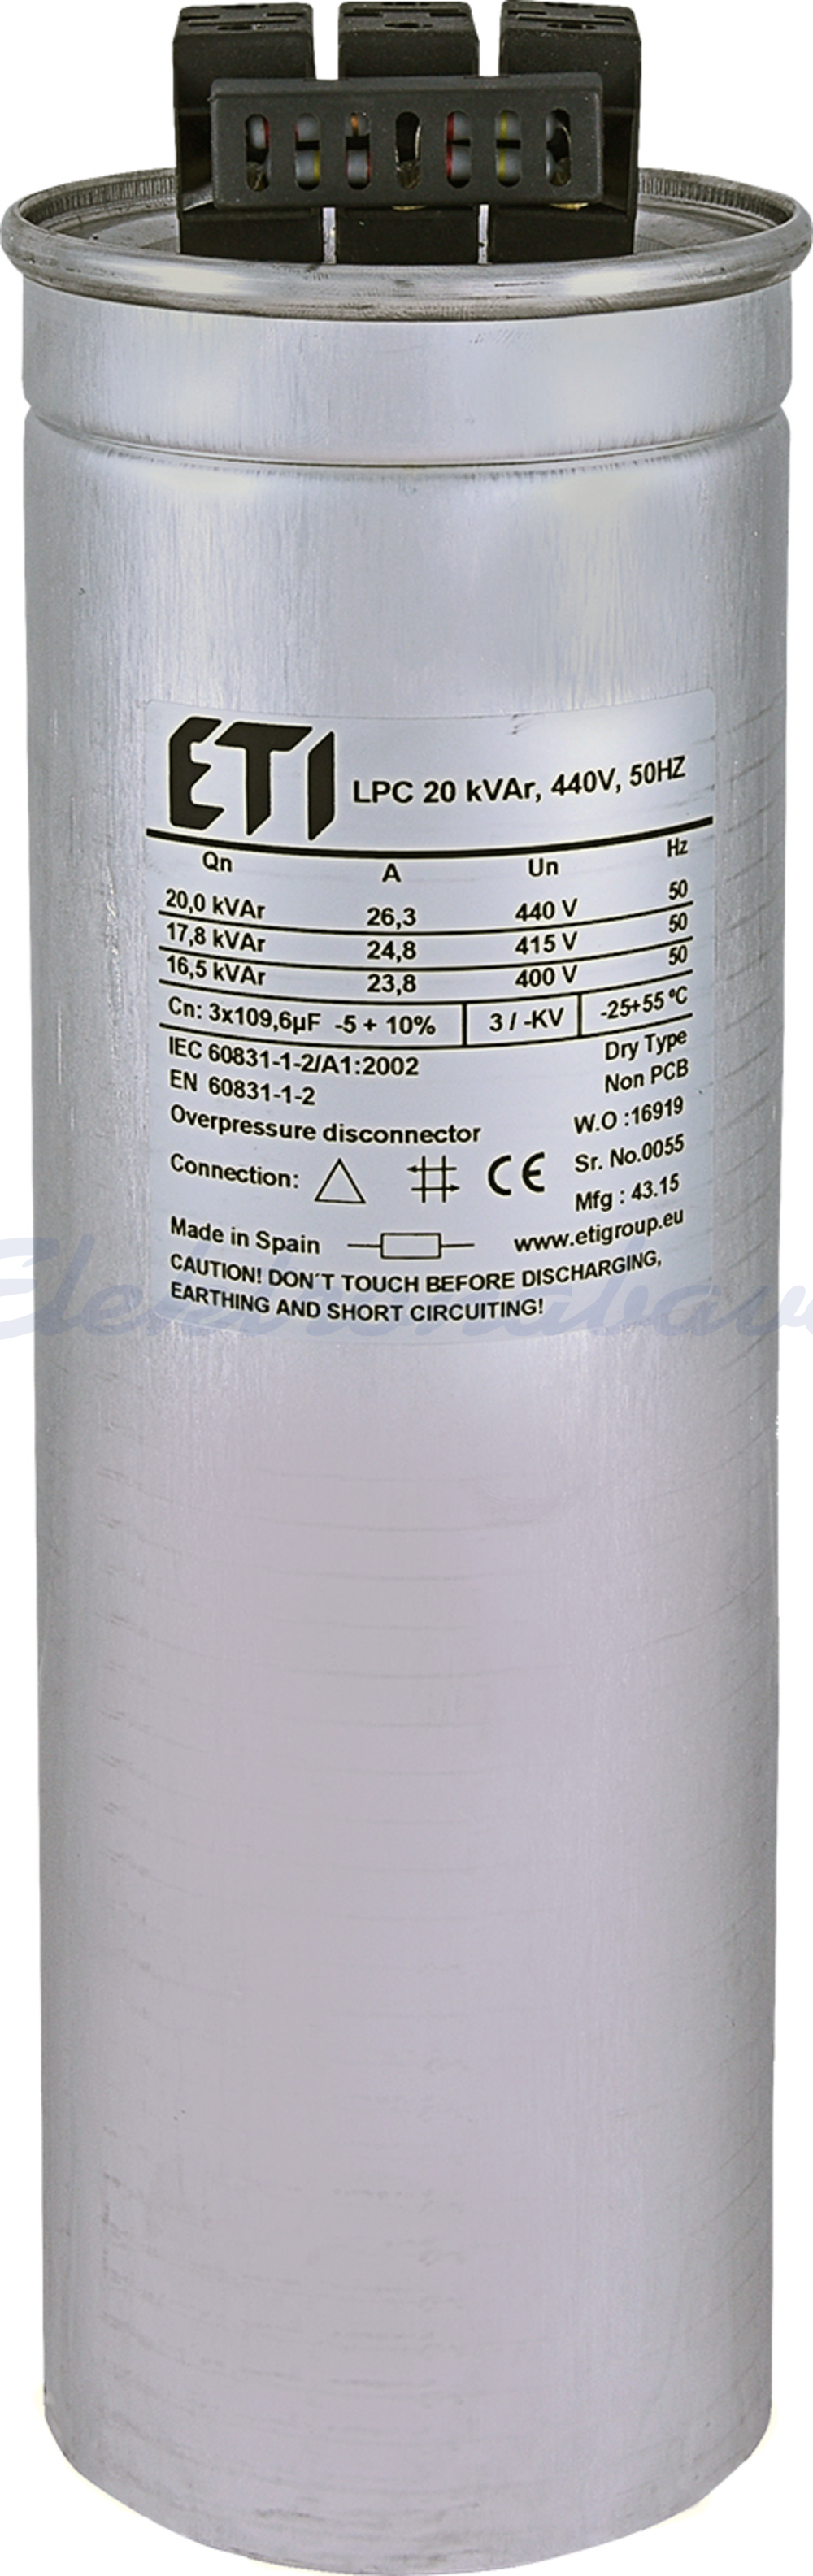 Slika izdelka Energetski kondenzator LPC 20kVar 440V 50Hz 3F Okrogel (3x109,6µF)